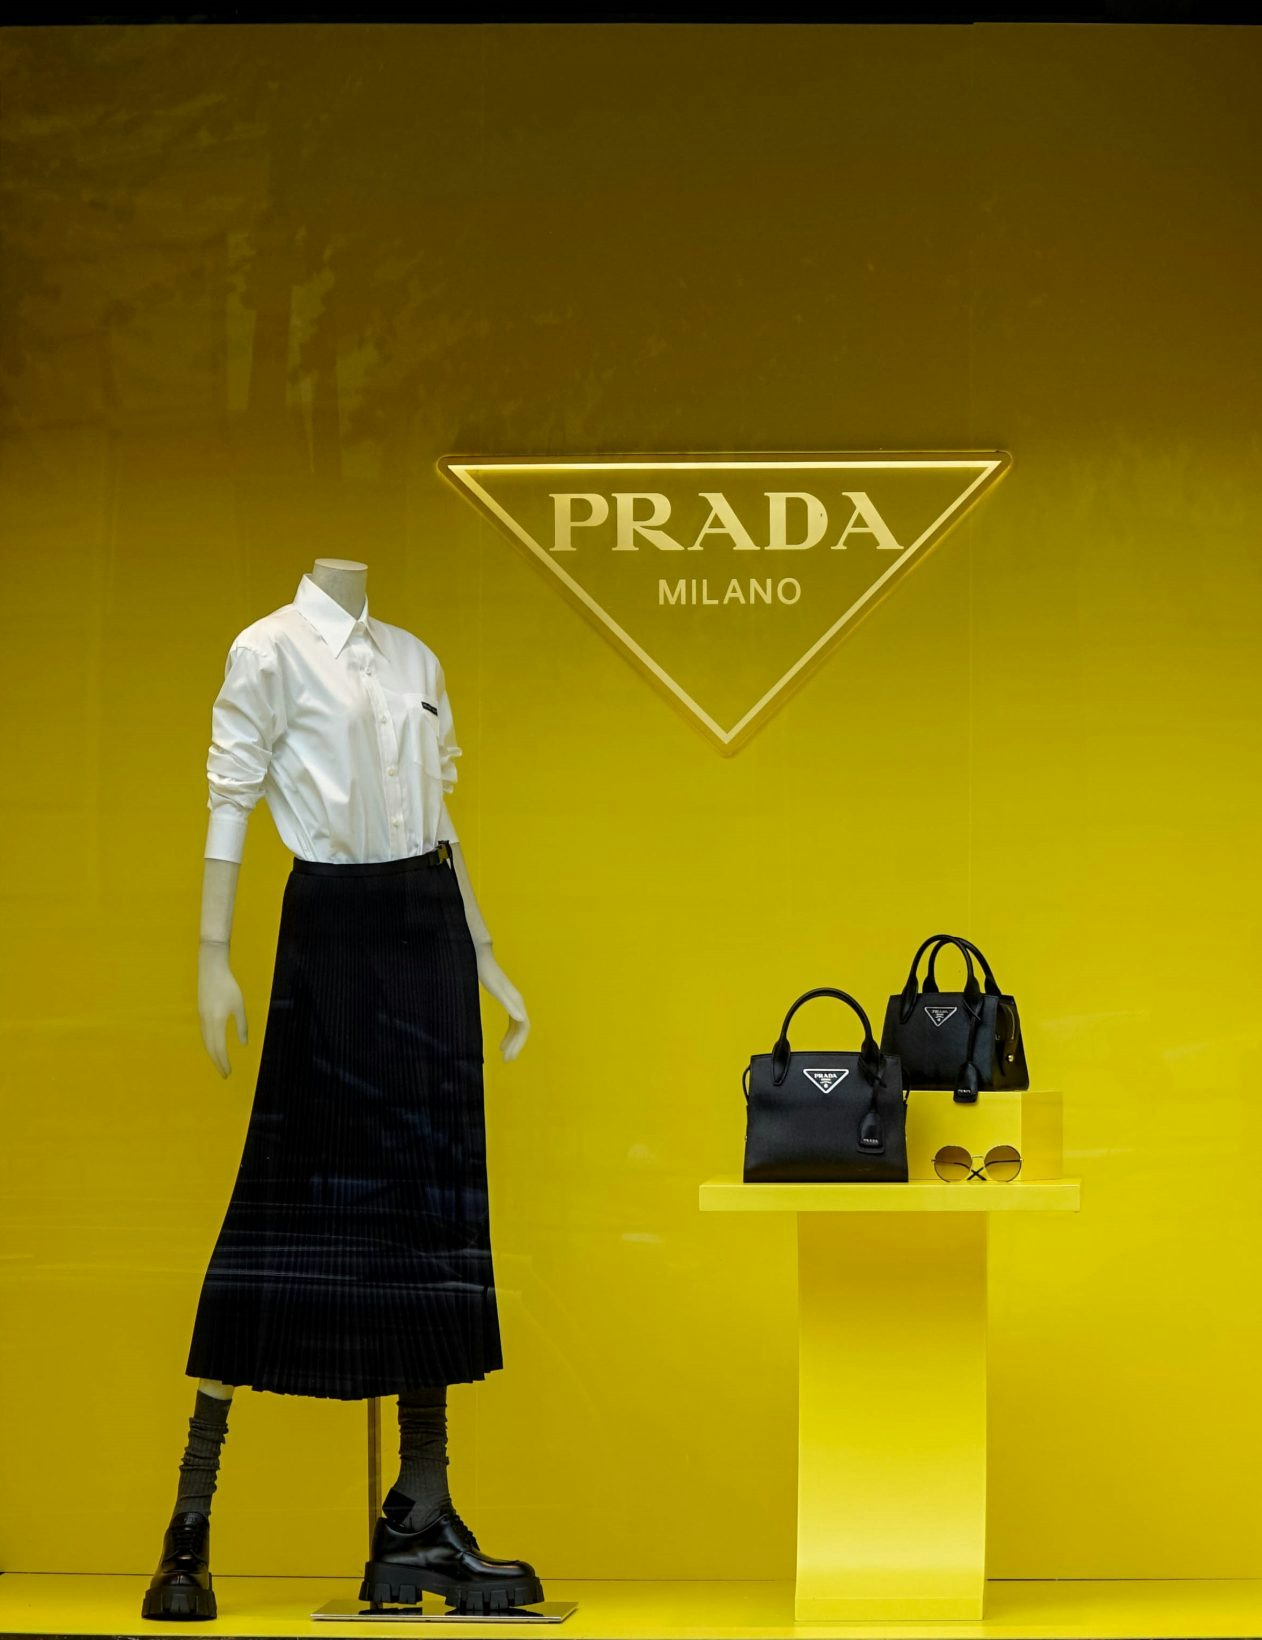 Prada Group’s 2022 earnings beat expectations